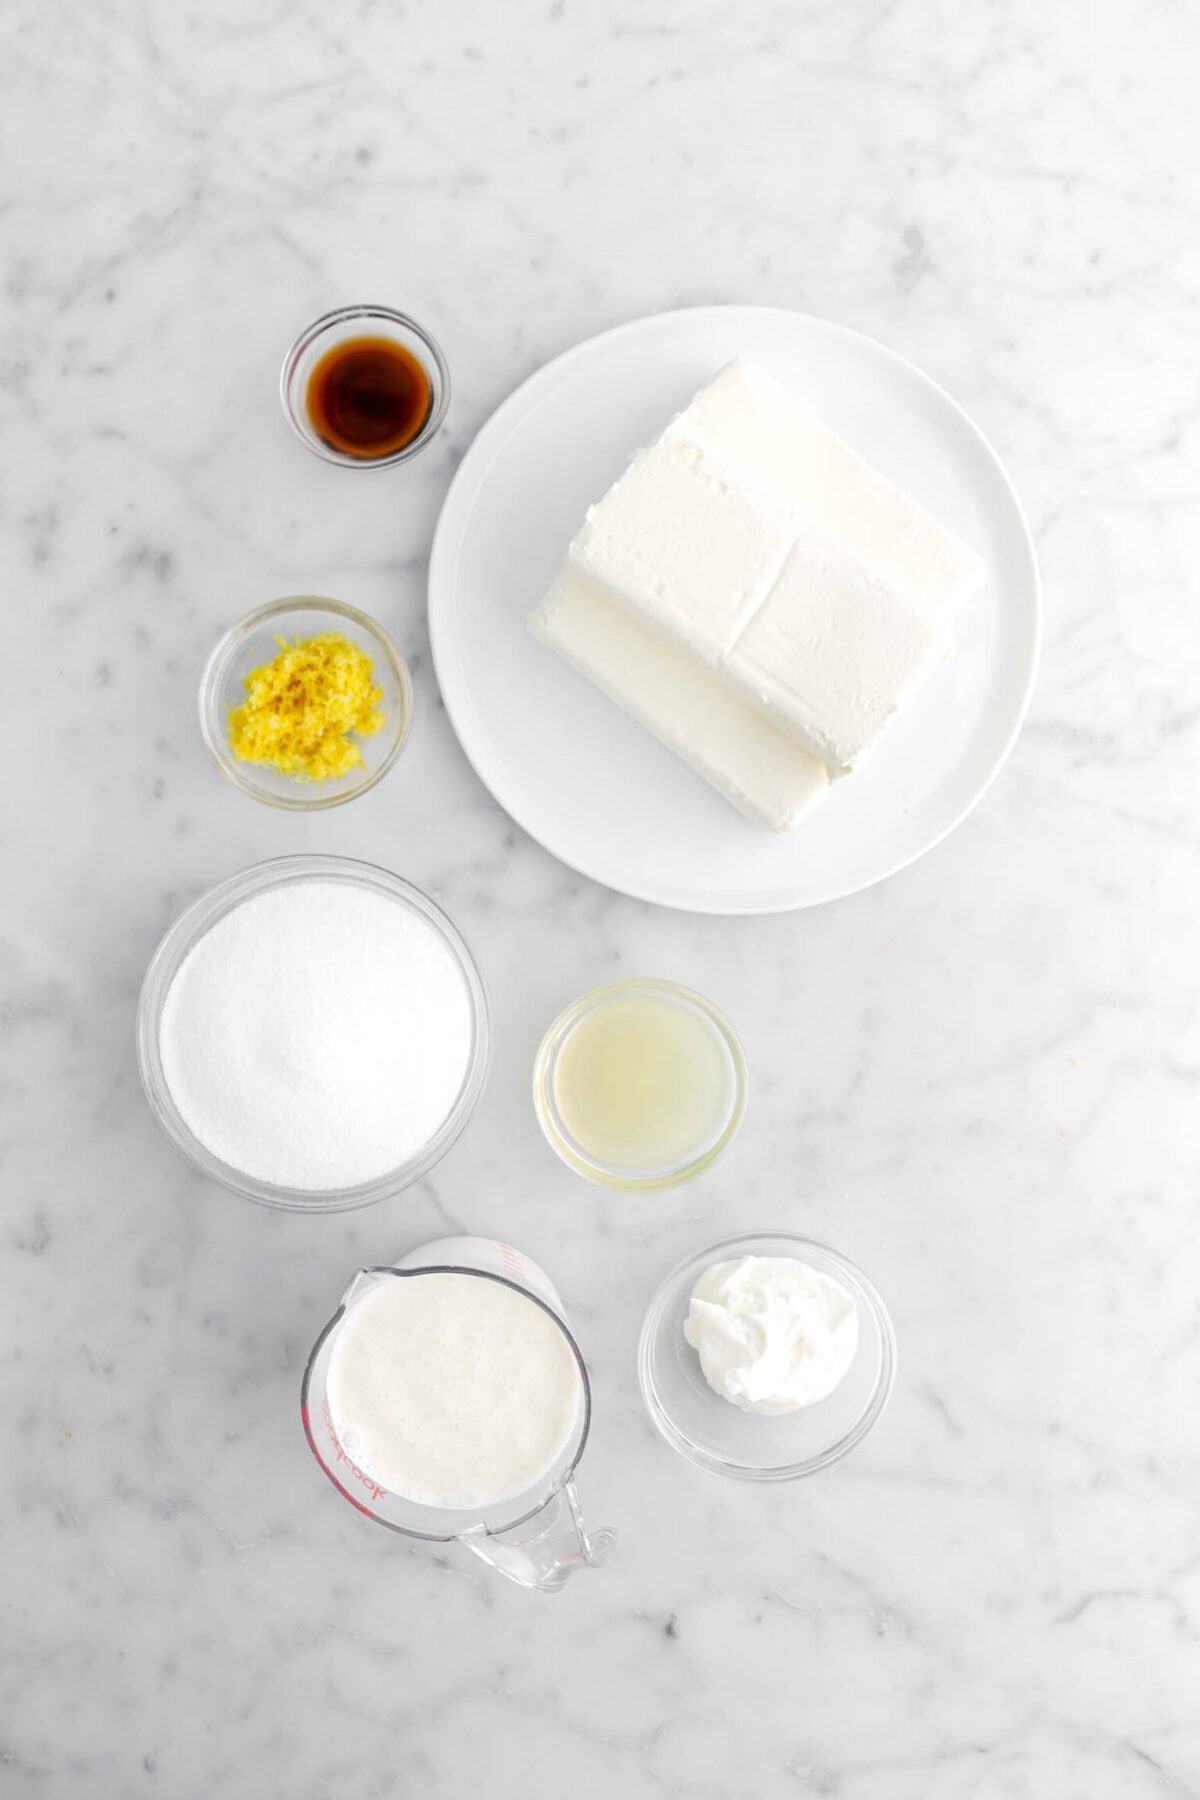 vanilla, cream cheese, lemon zest, sugar, lemon juice, cream, and sour cream on marble surface.